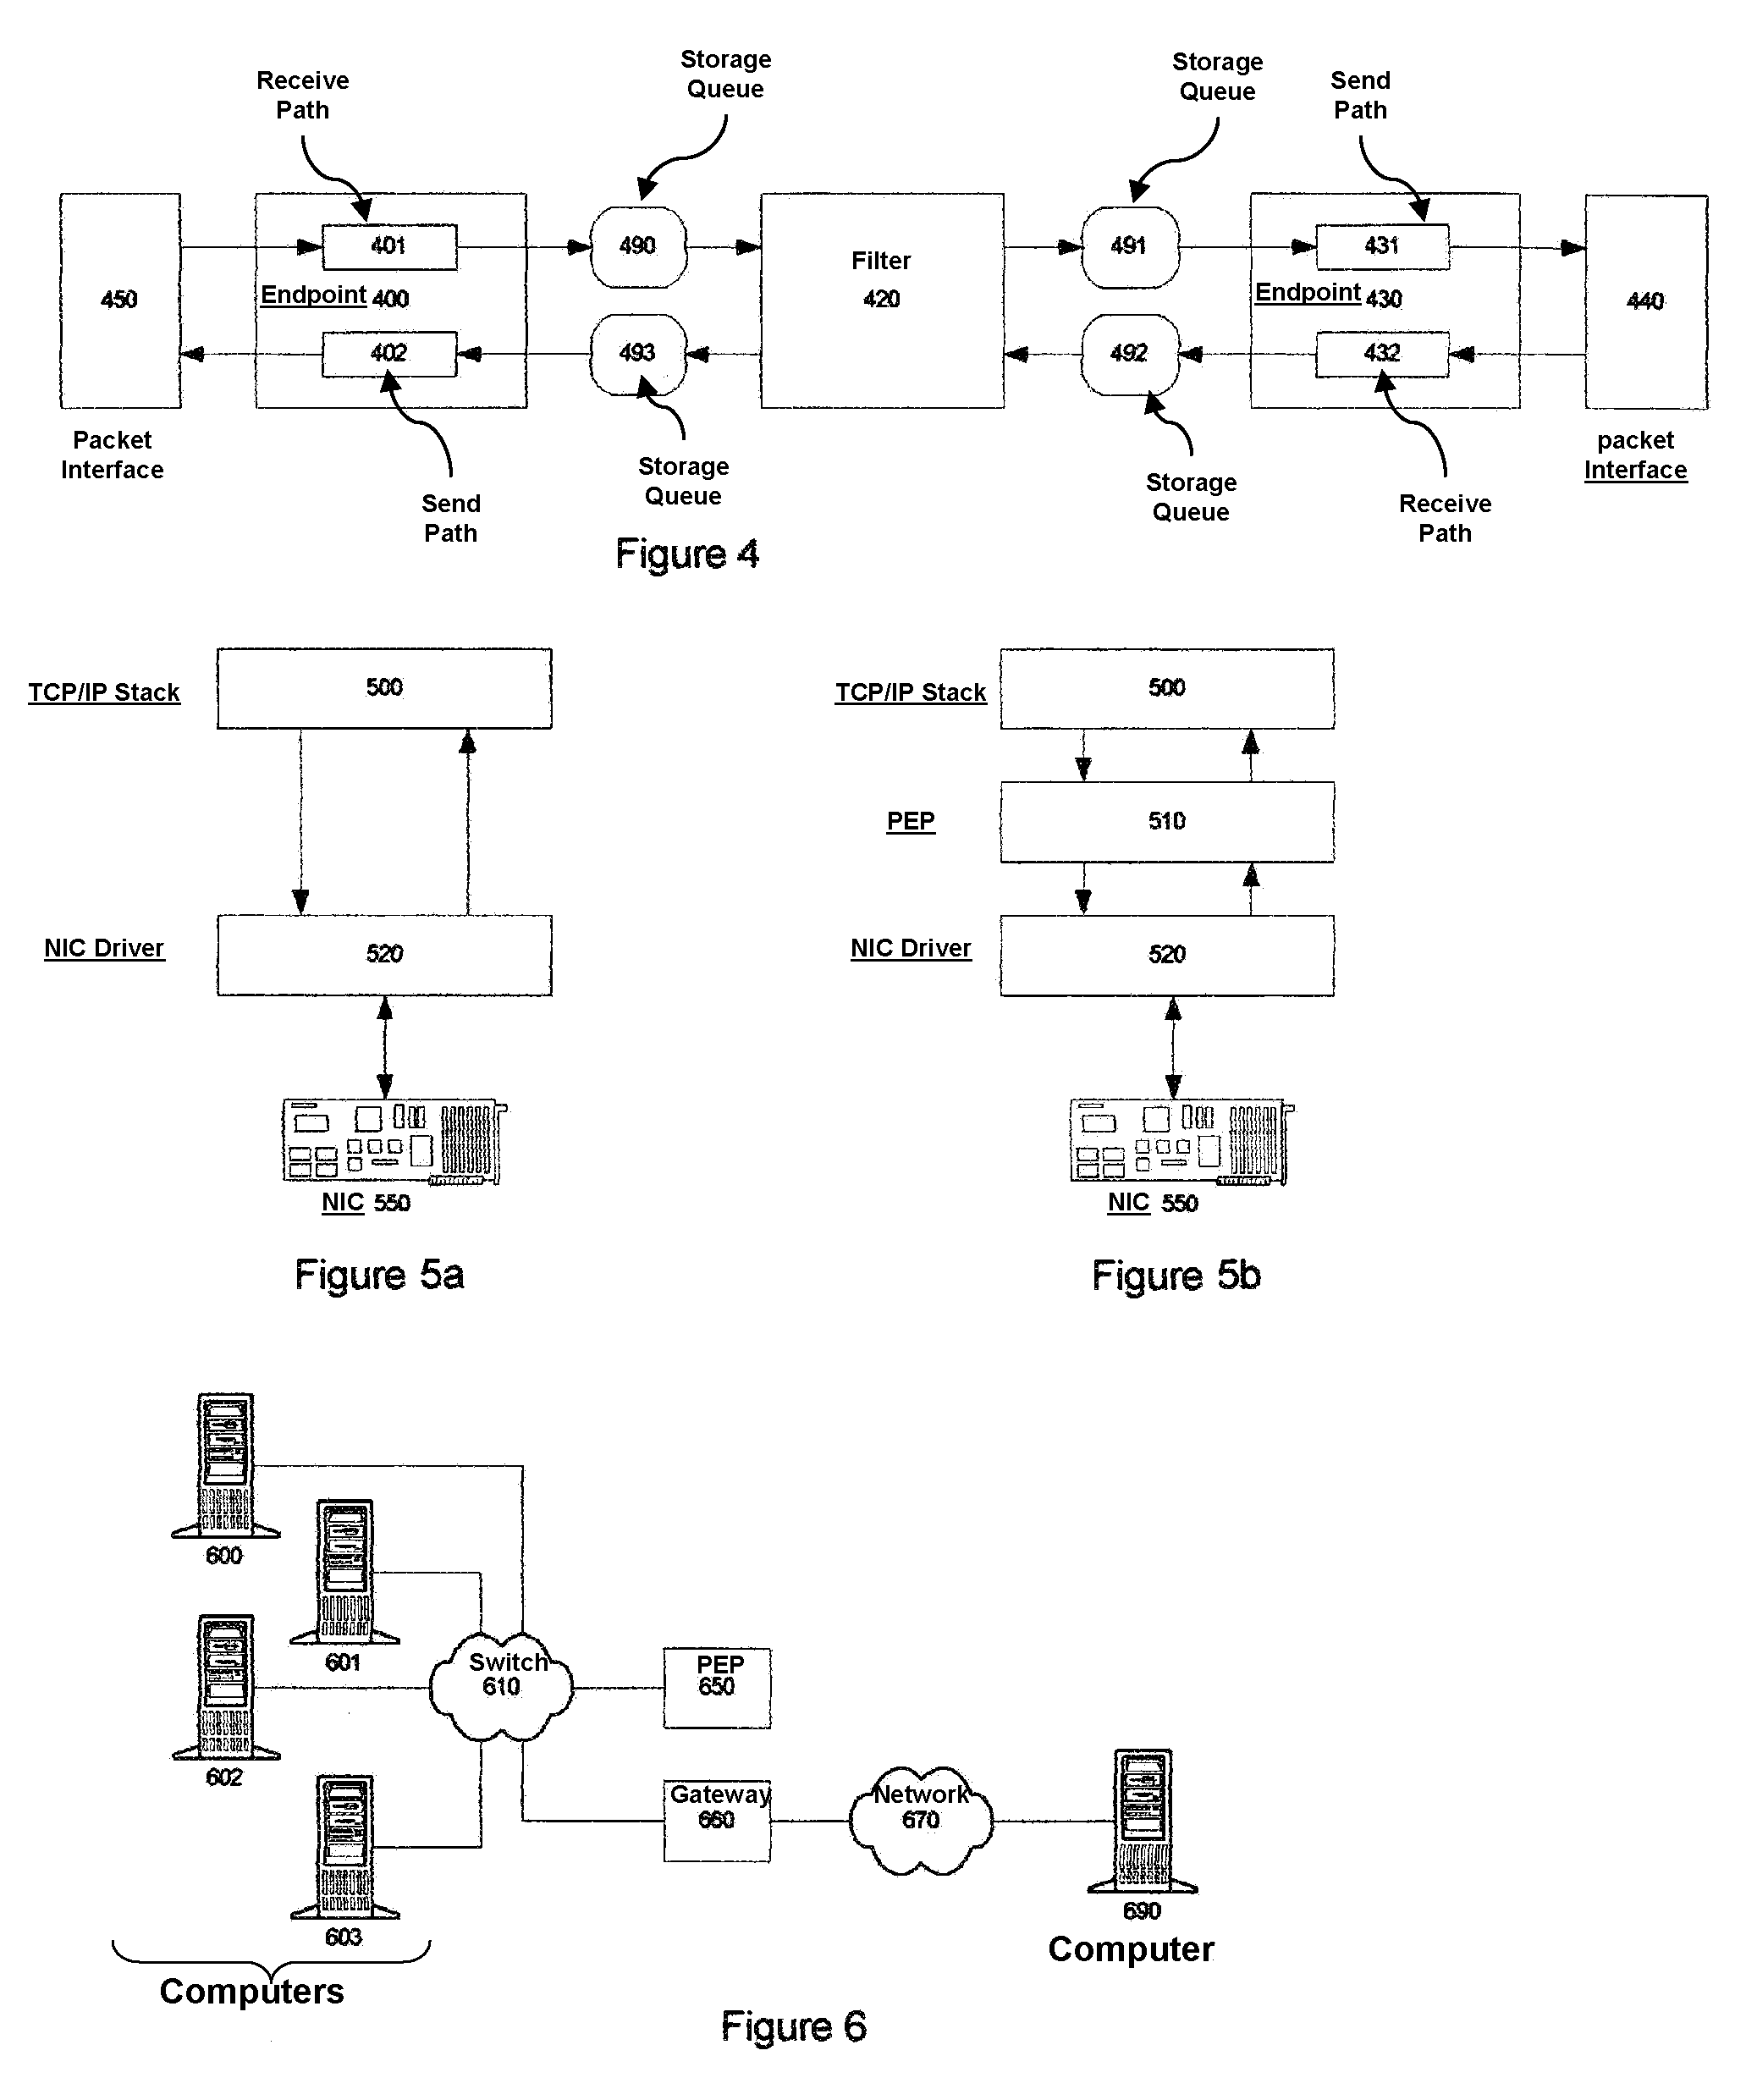 Flow control system architecture